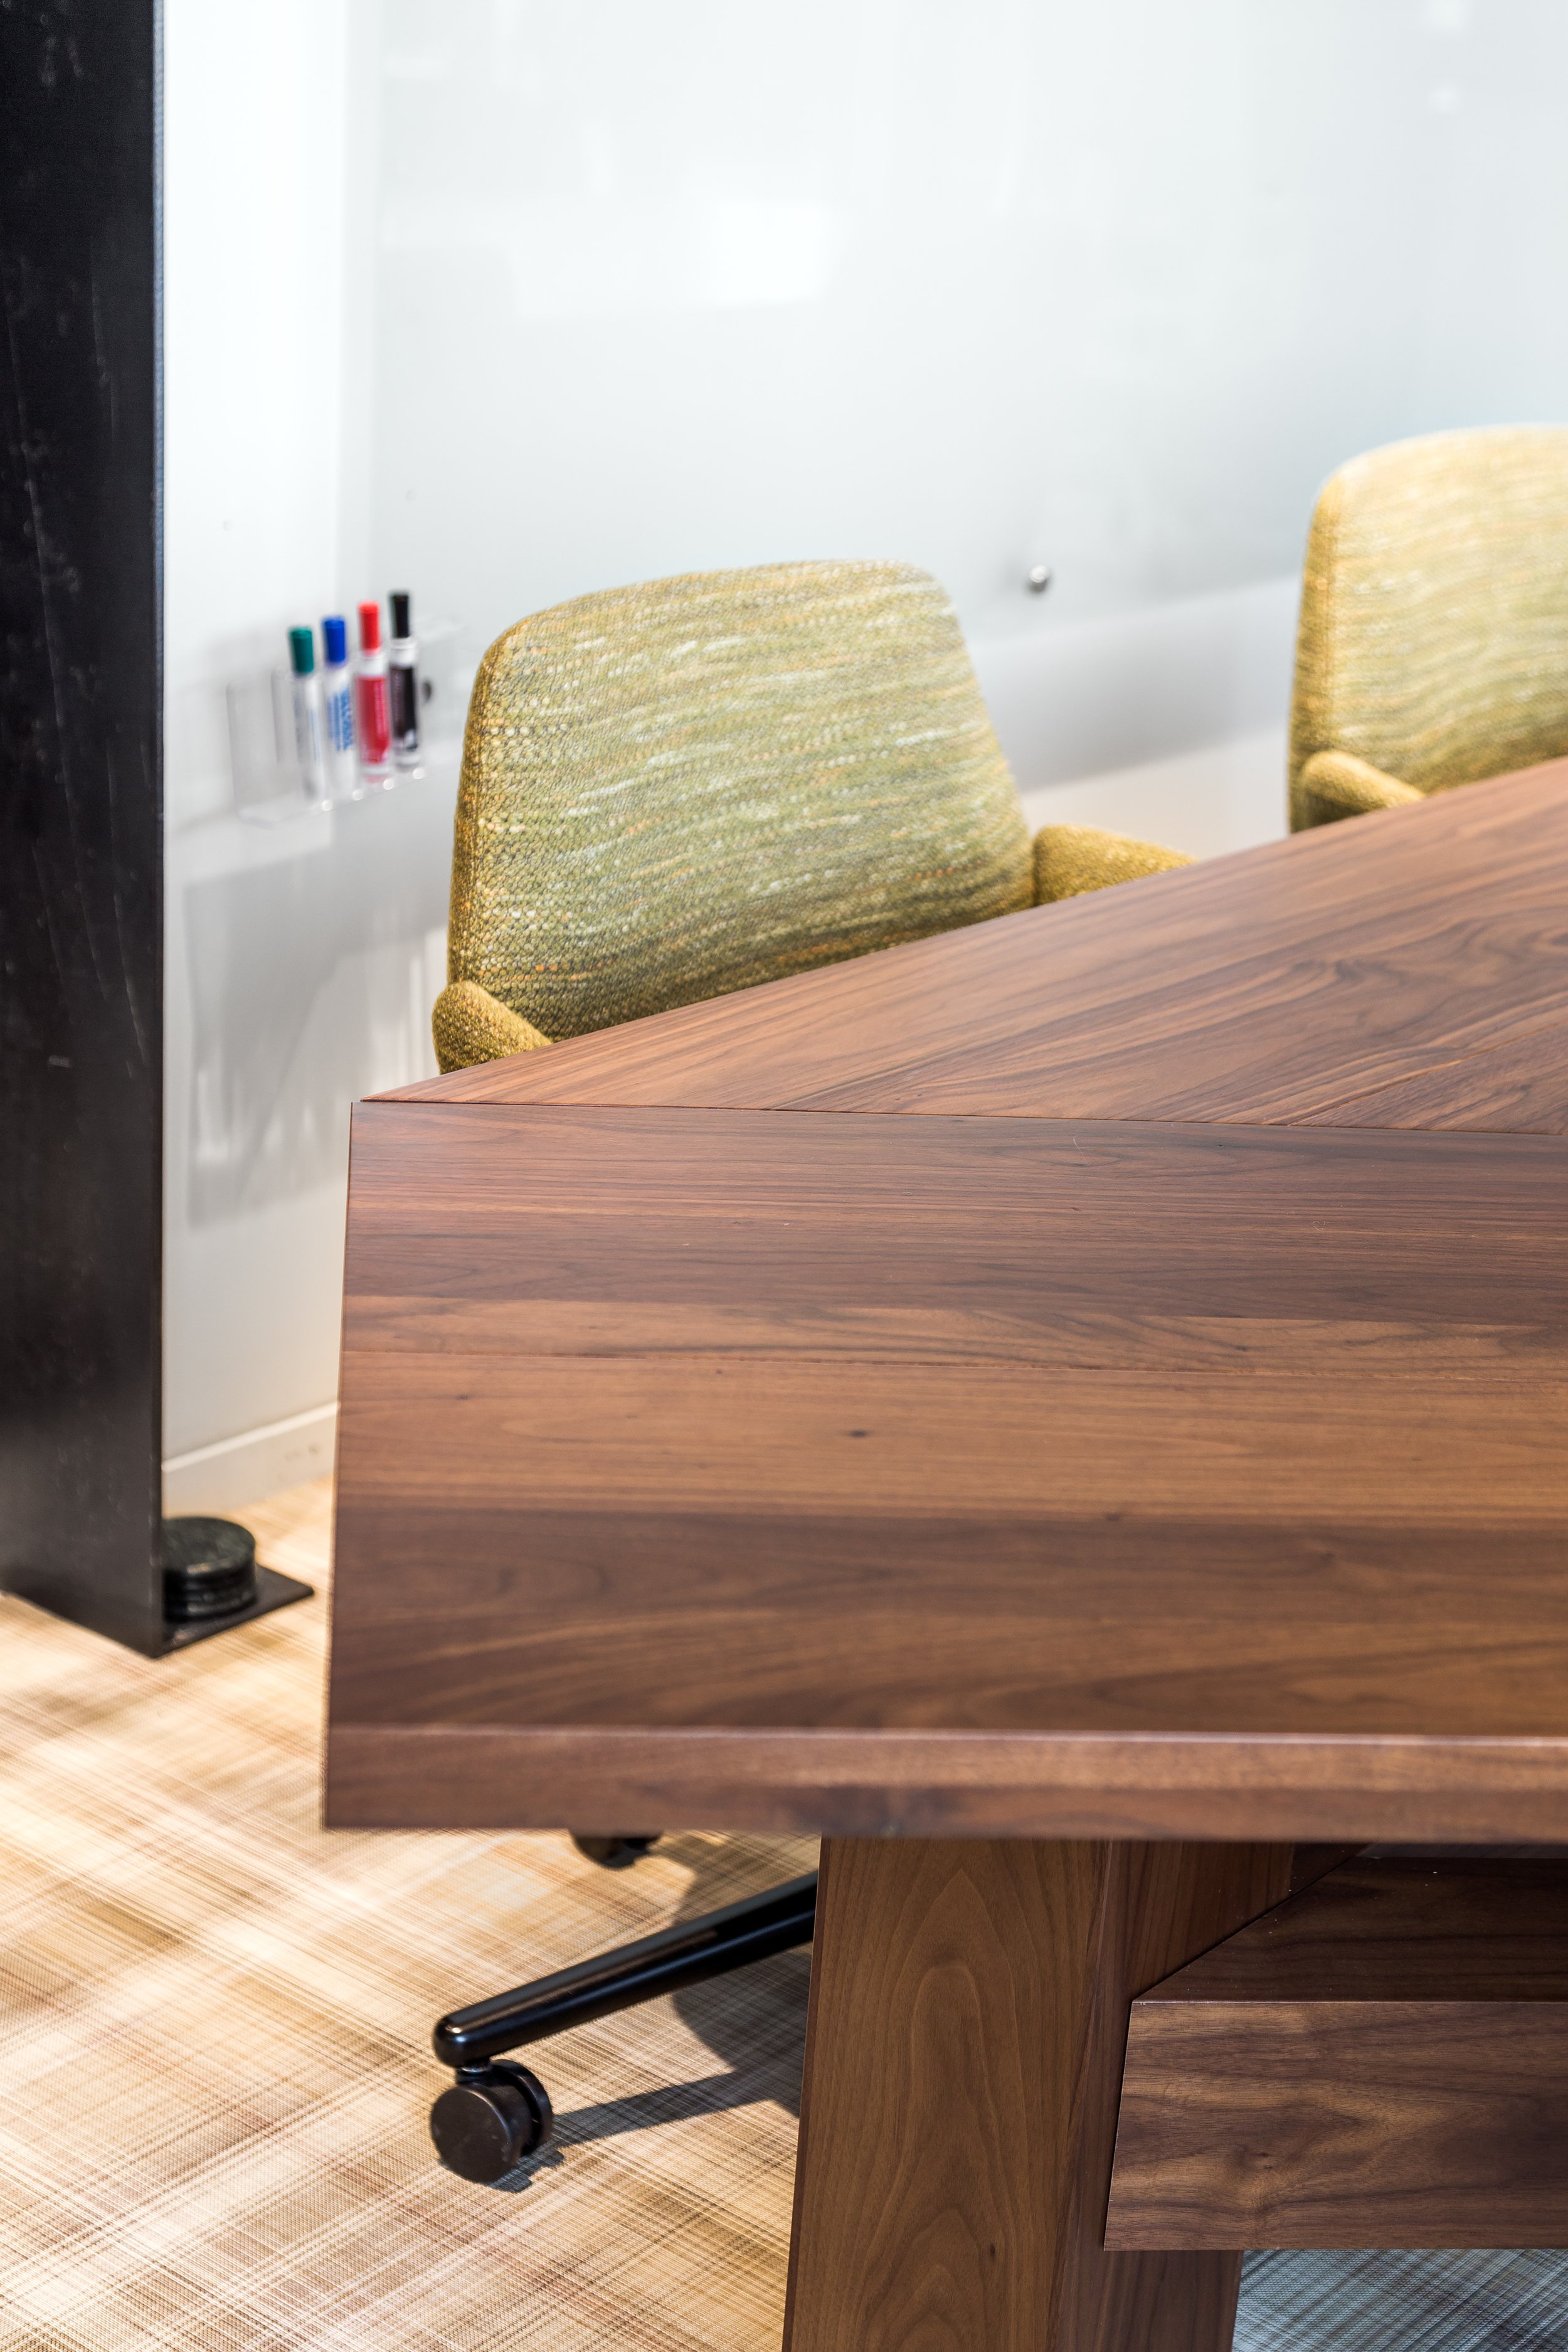 SkB - Product - Furniture - McKinsey Touchdown Tables -2.jpg